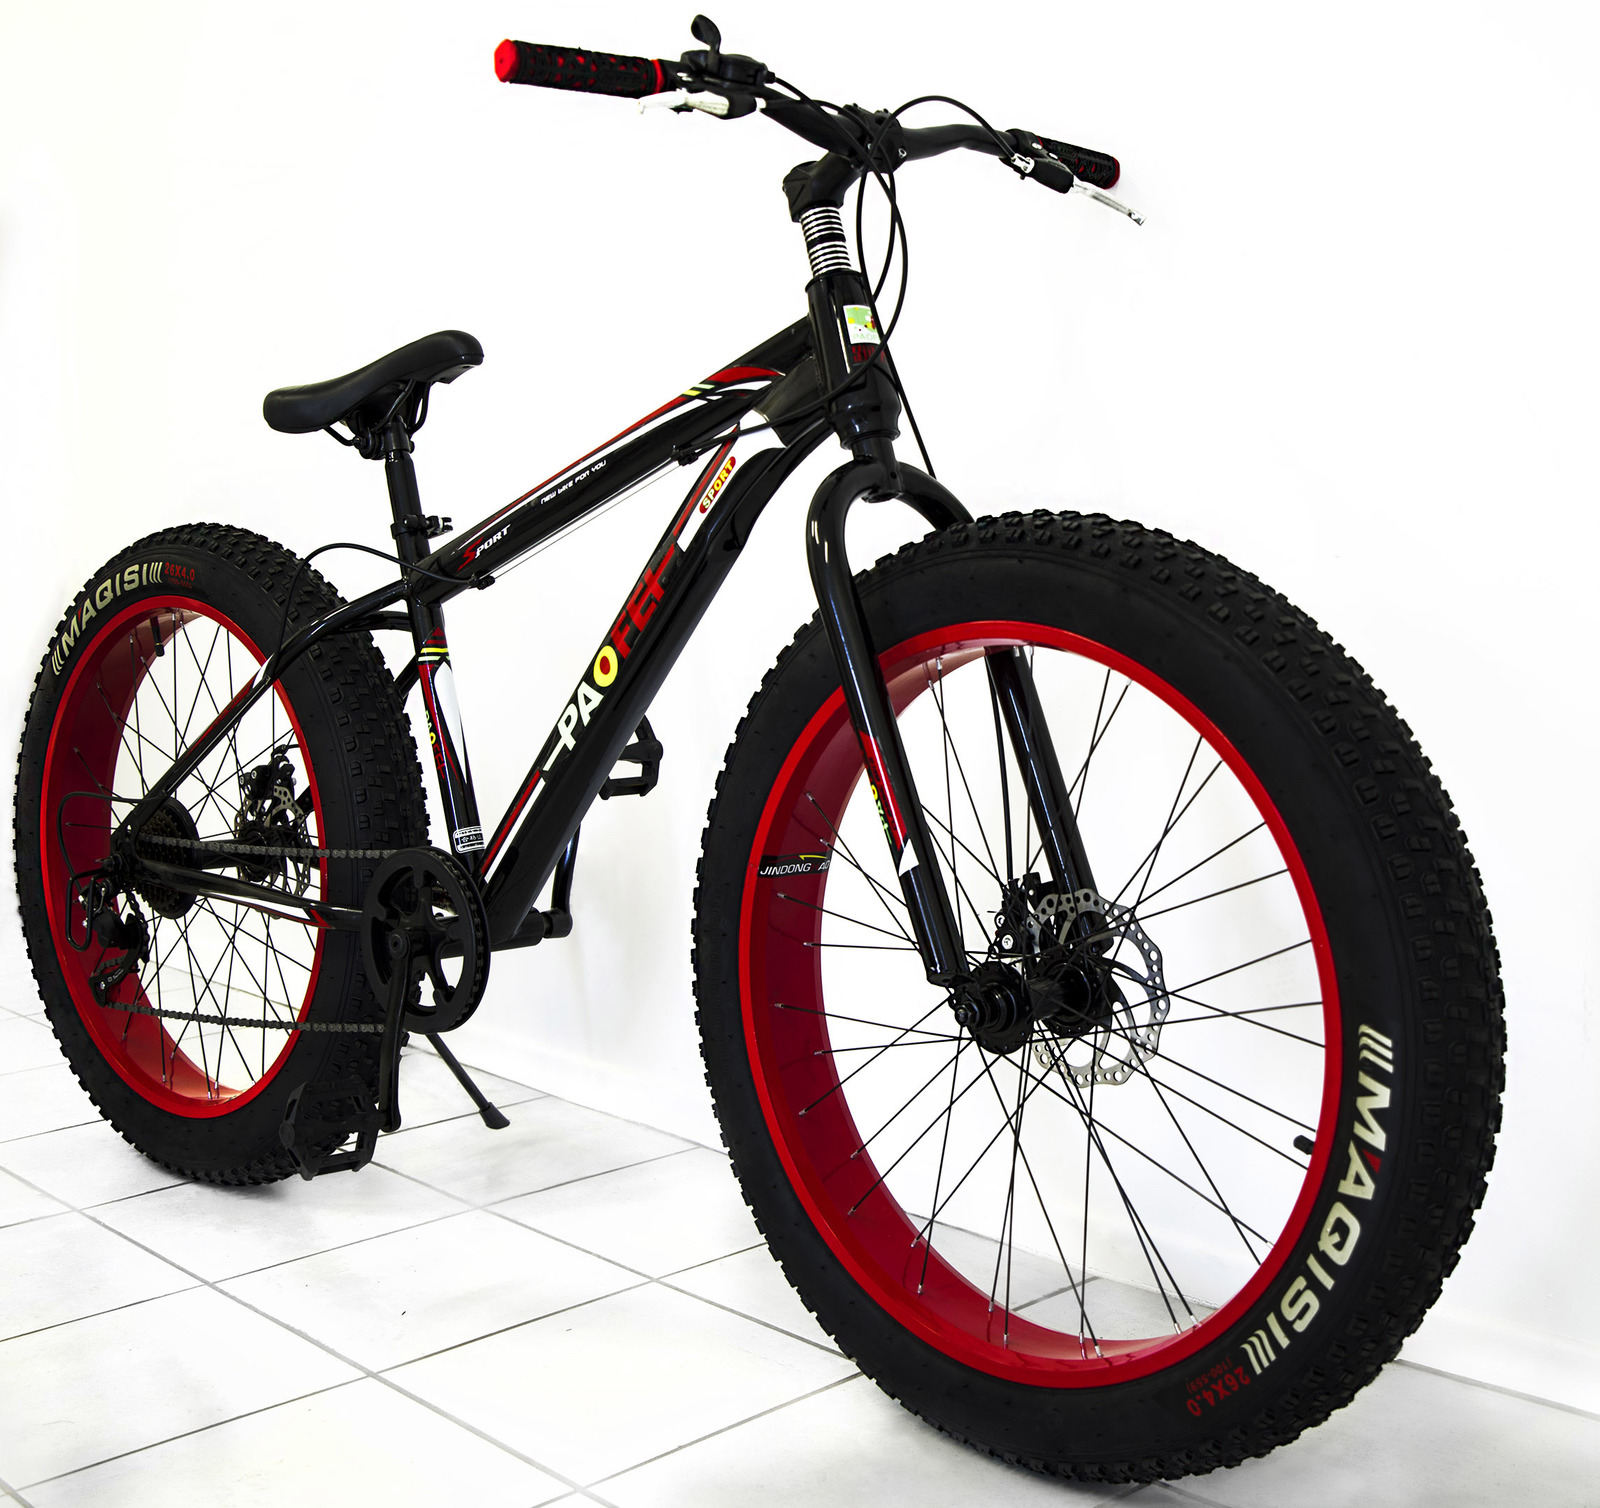 Large Tire Heavy Duty Fat Wheel Mountain Bike (Premium Red & Black Bicycle)